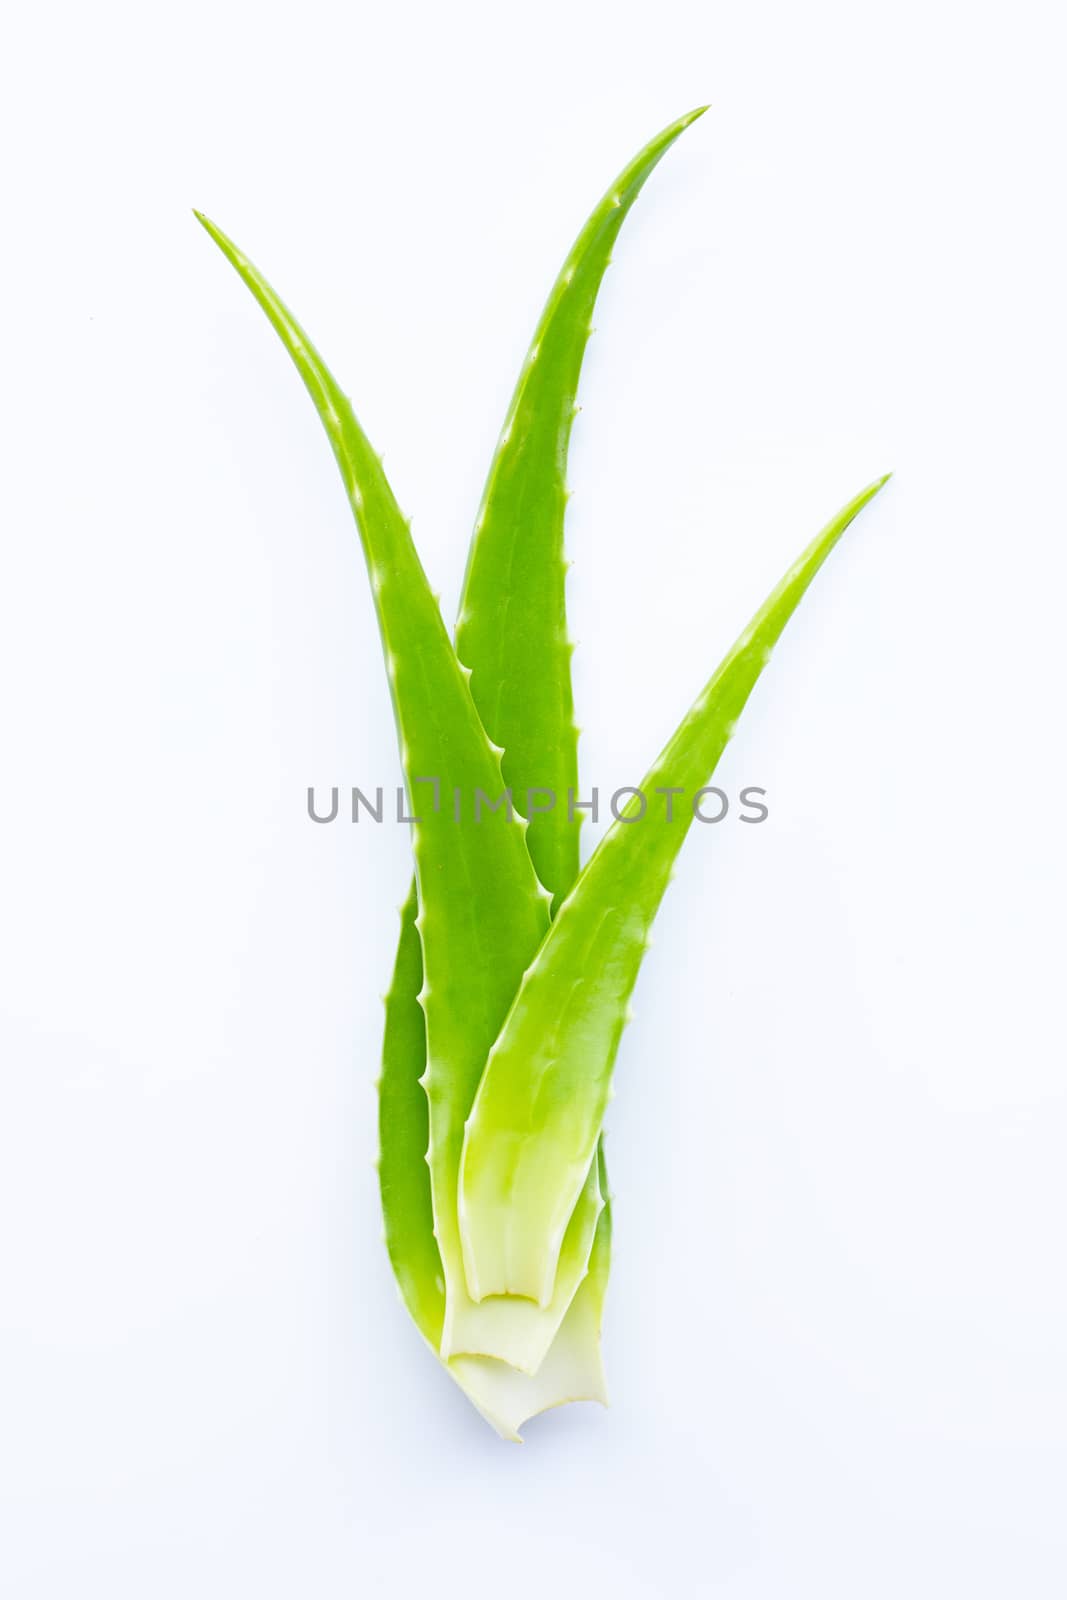 Aloe vera fresh leaves on white background.  